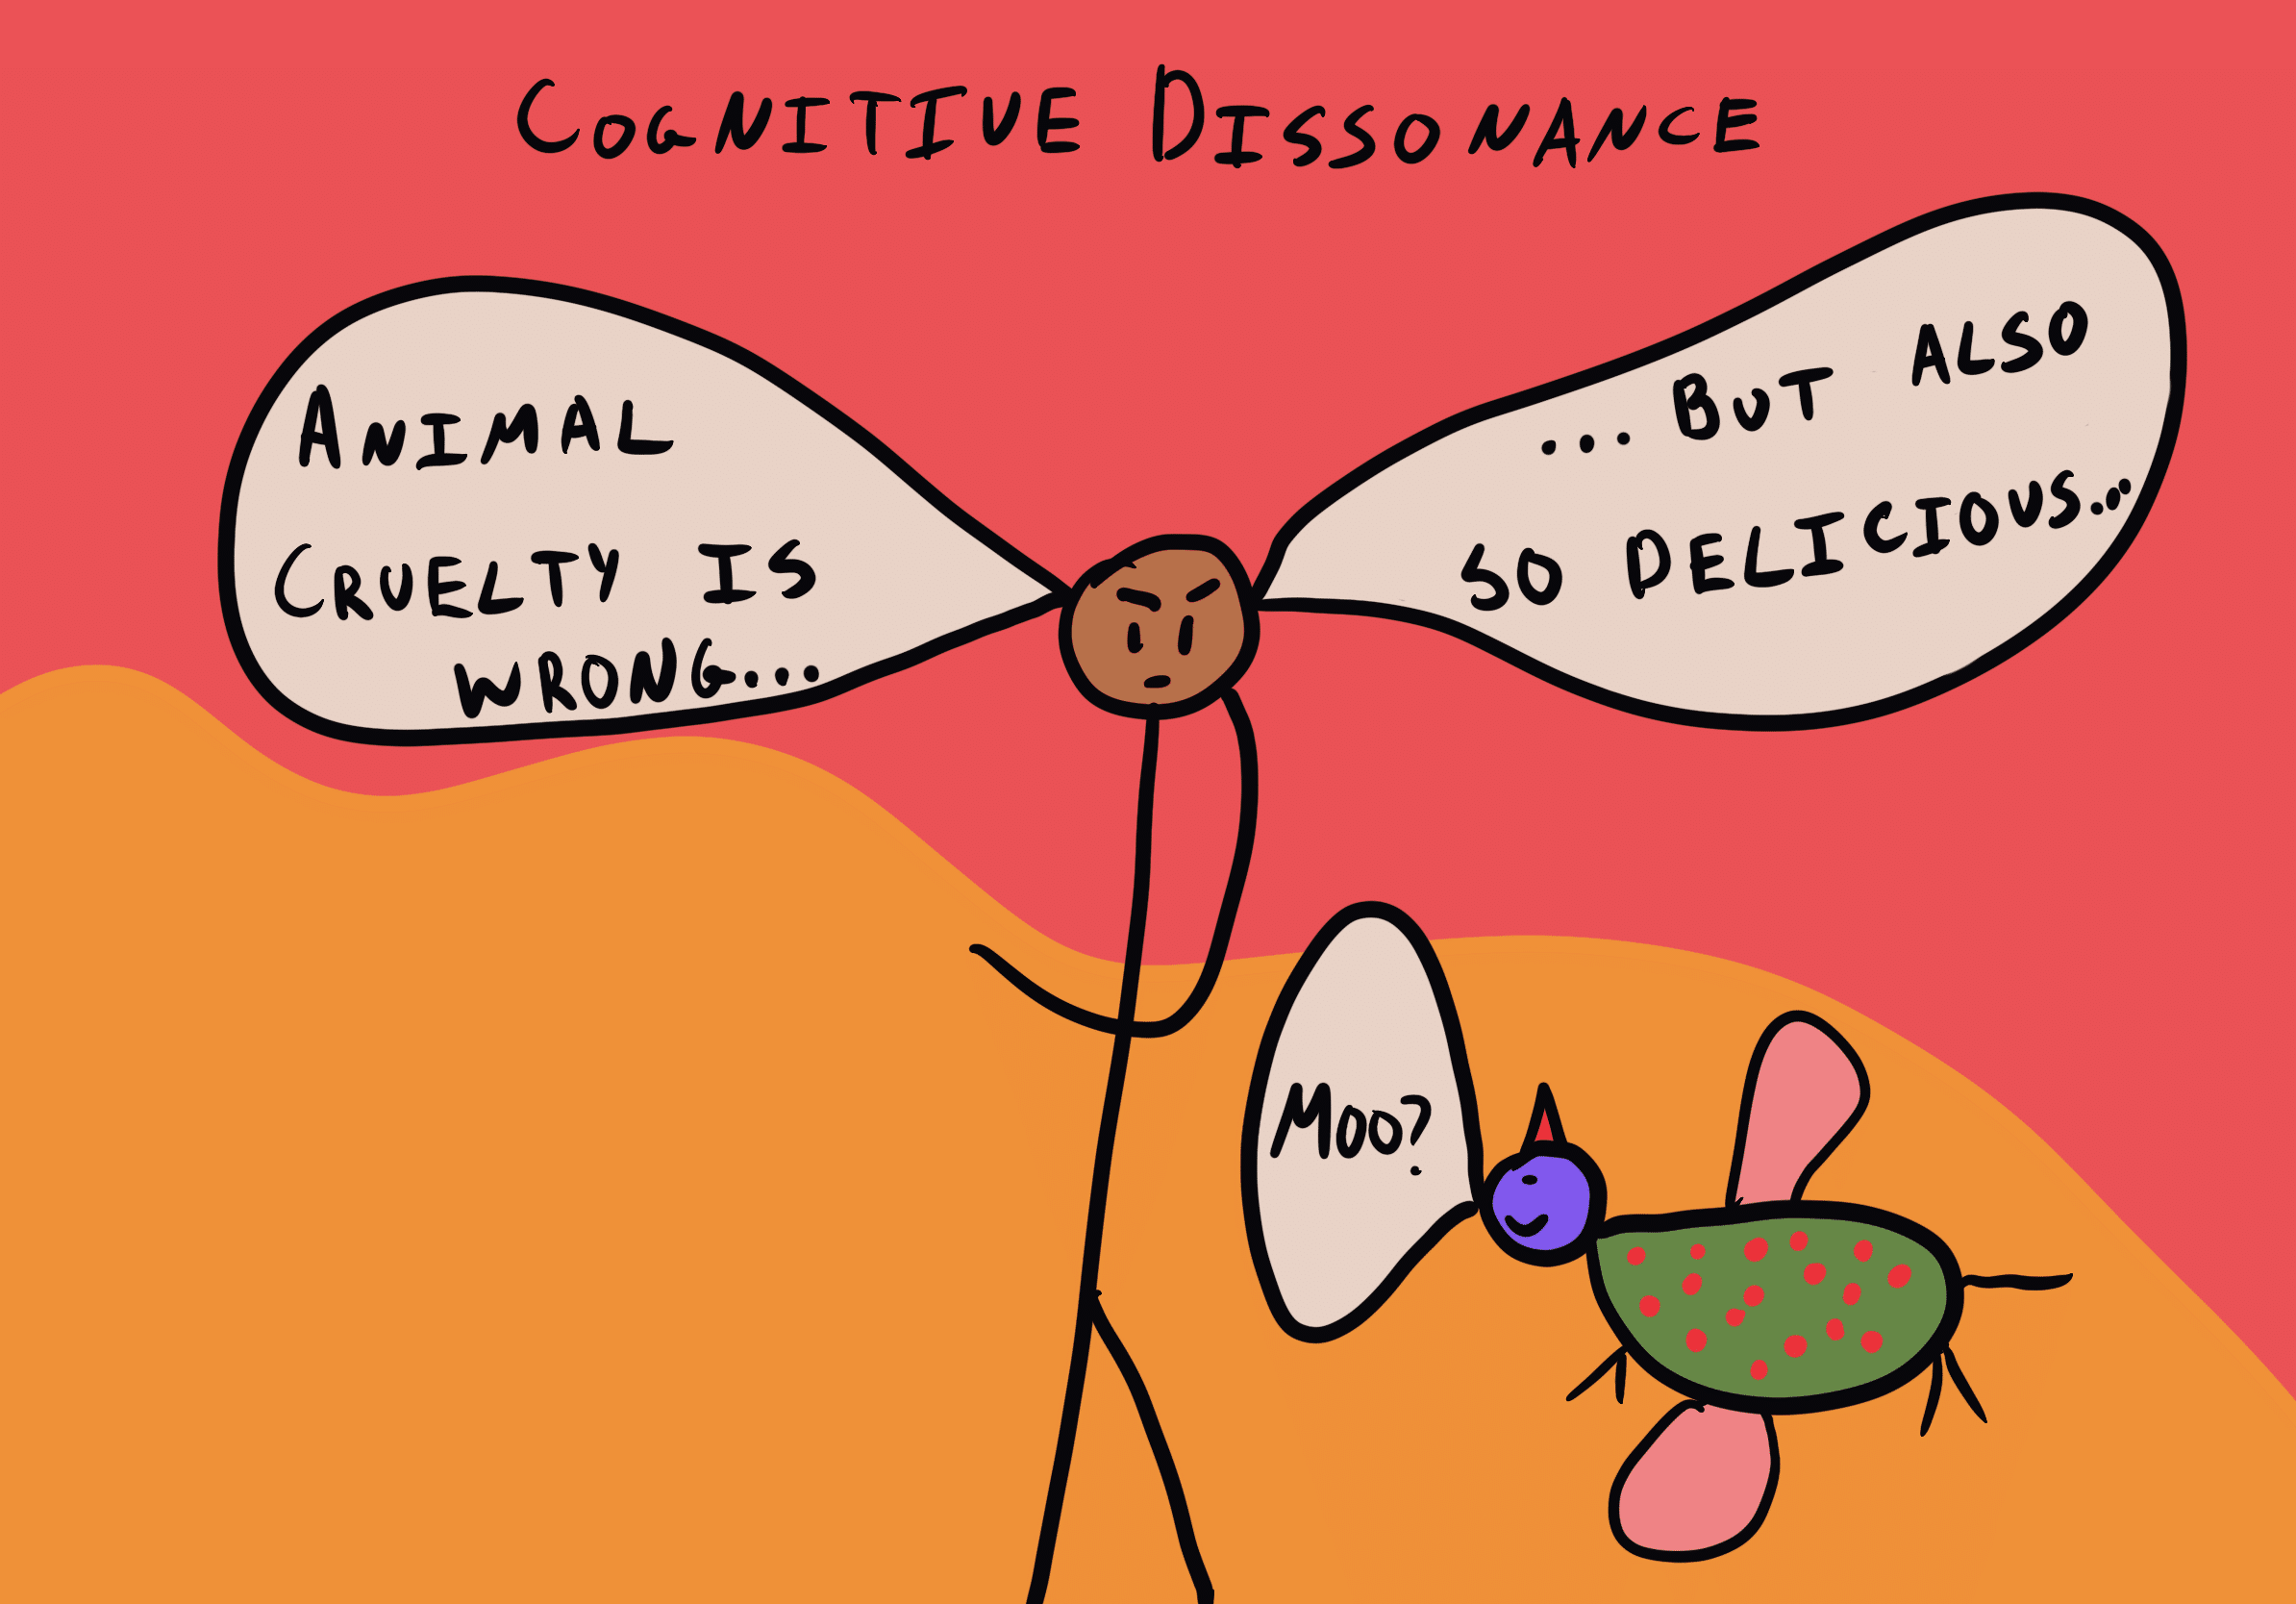 Cognitive Dissonance illustrations